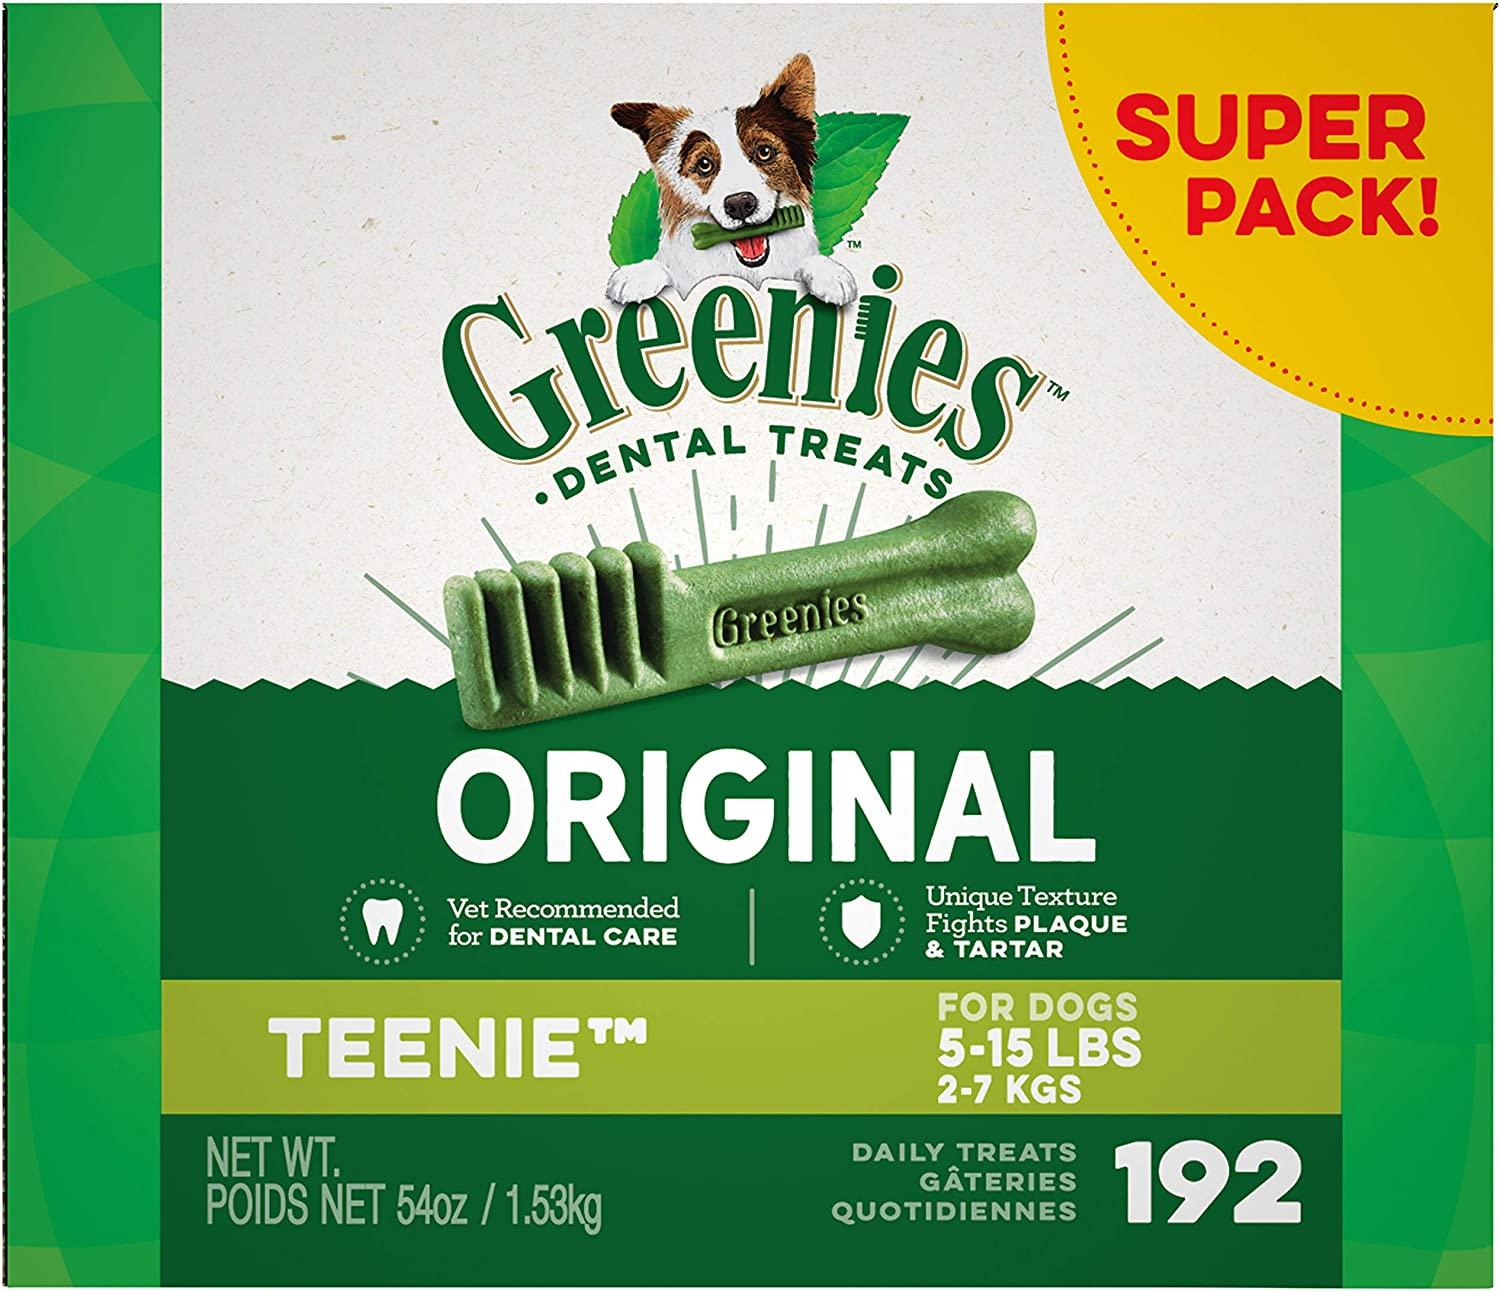 192 Greenies Original Teenie Natural Dental Dog Treats for $20.94 Shipped